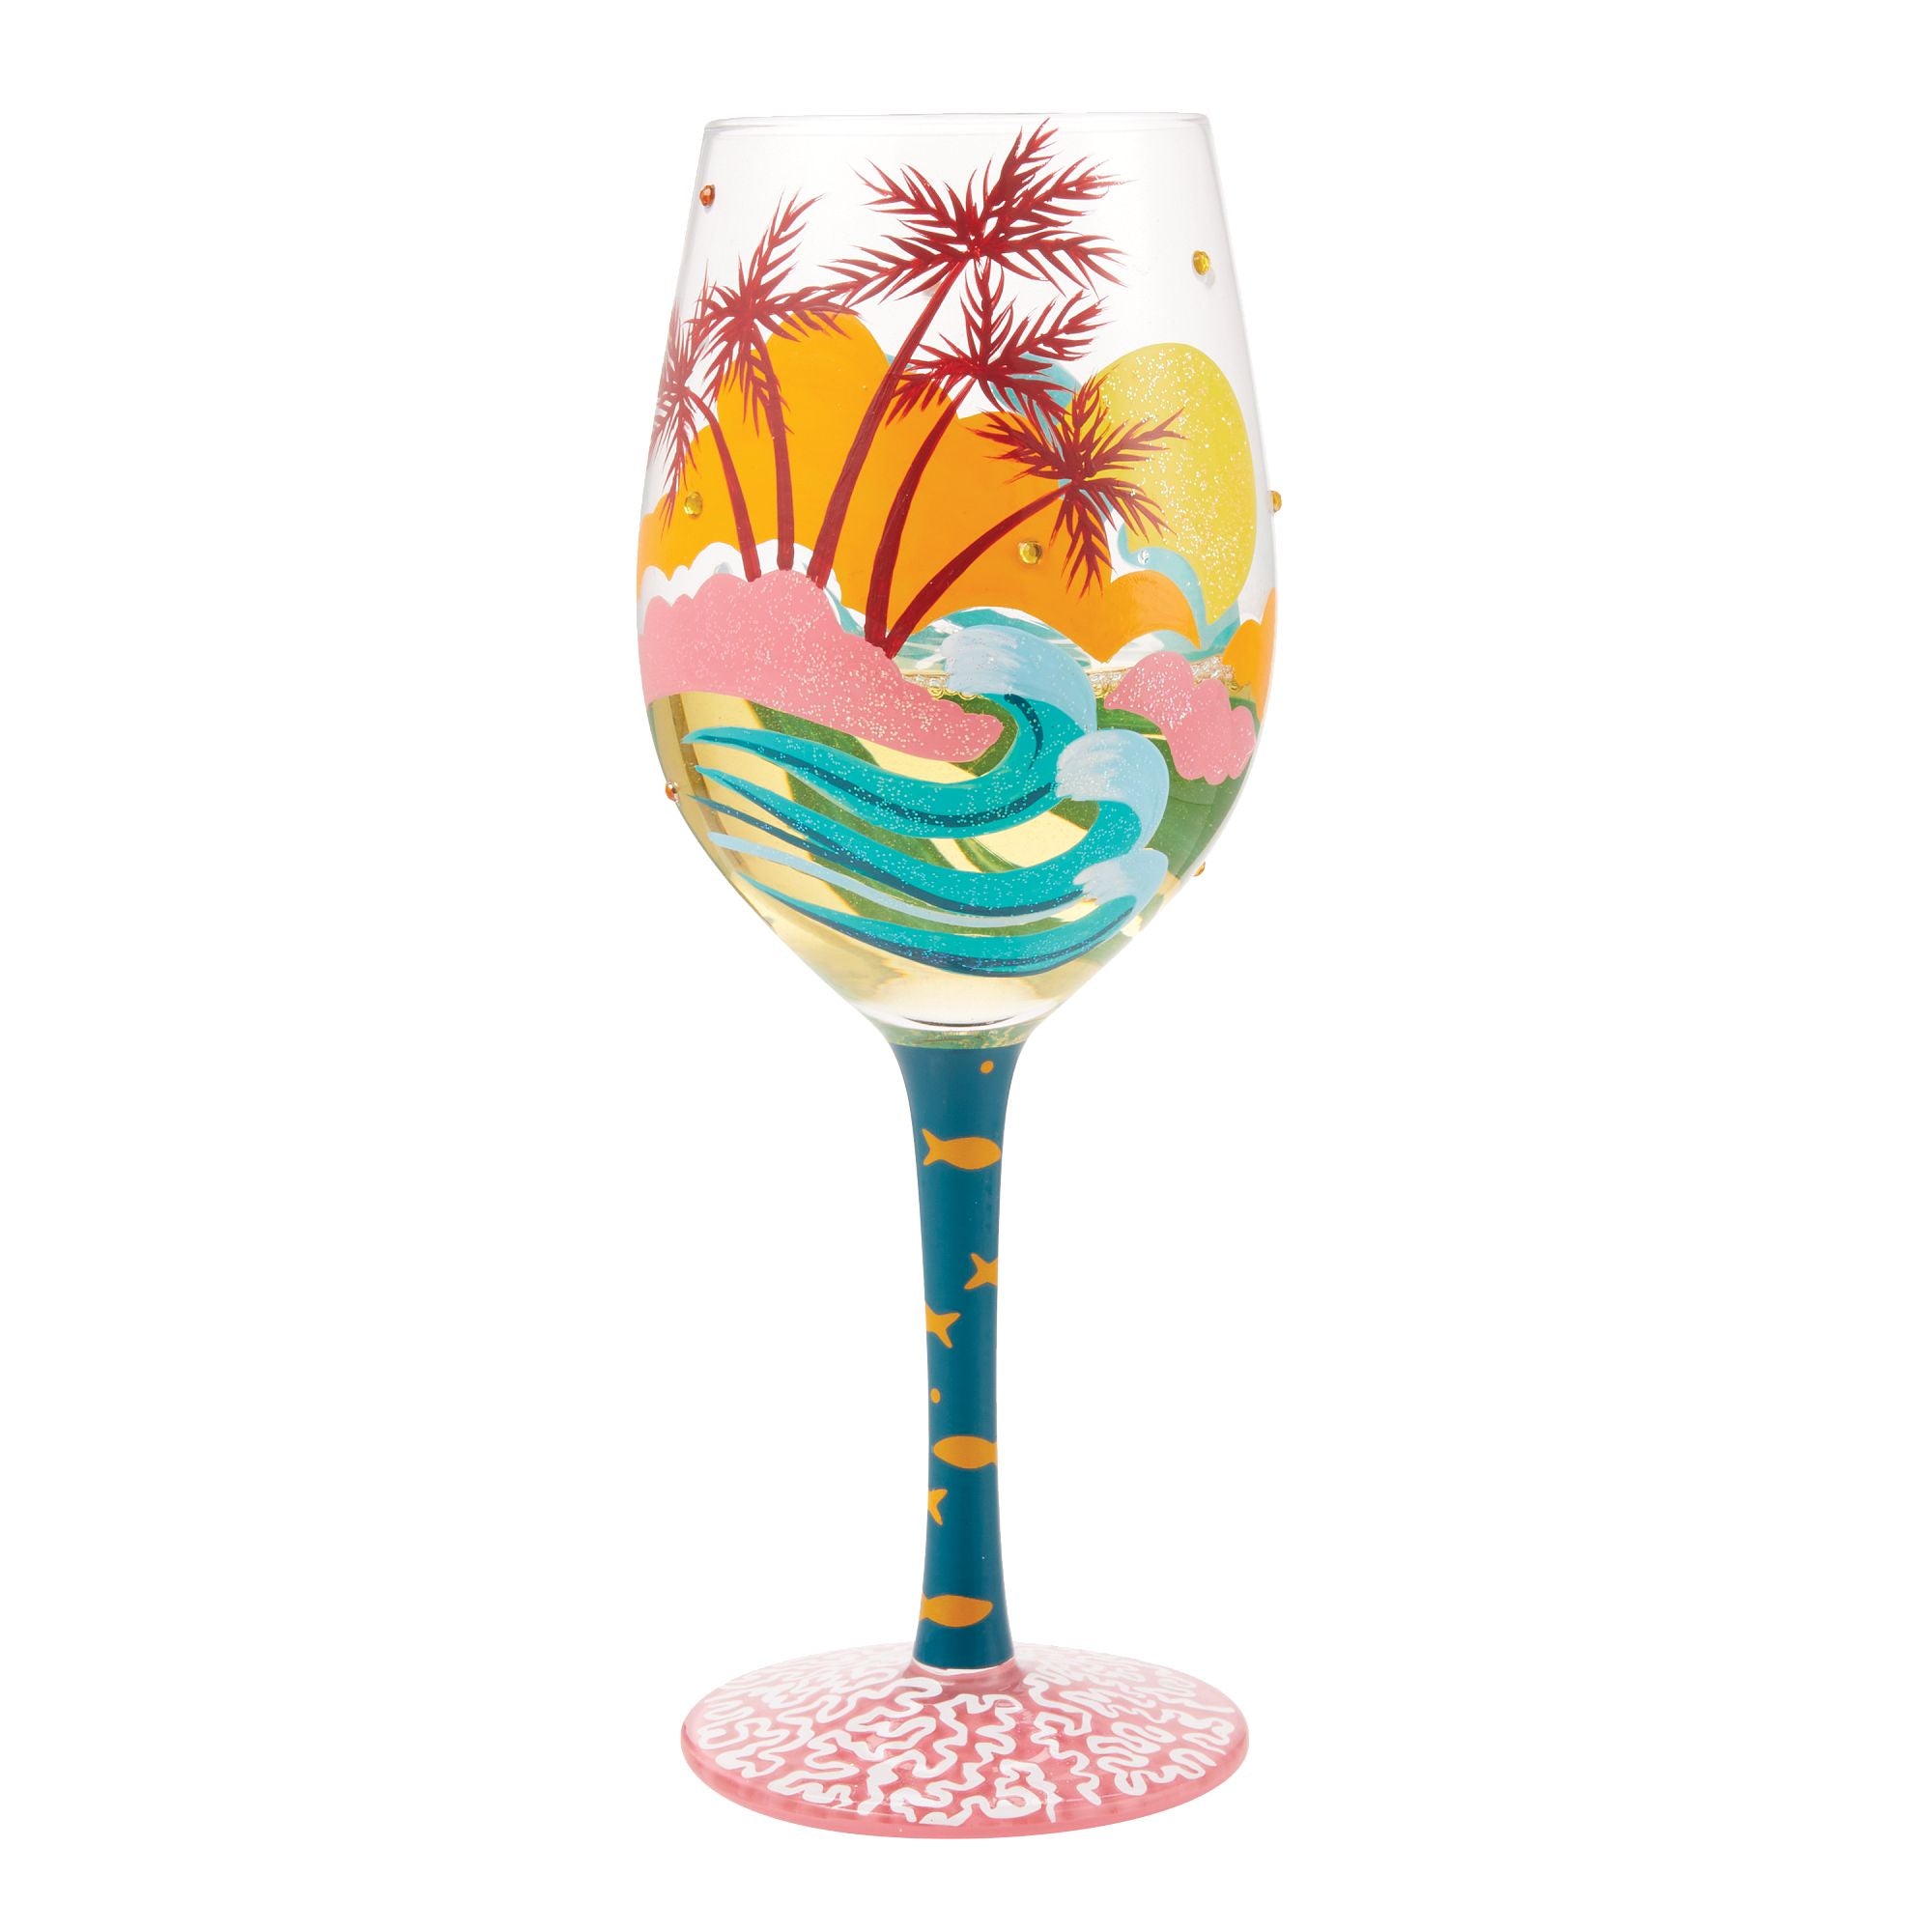 Designer Handblown Crystal Wine Glasses, Unique Iridescent Design